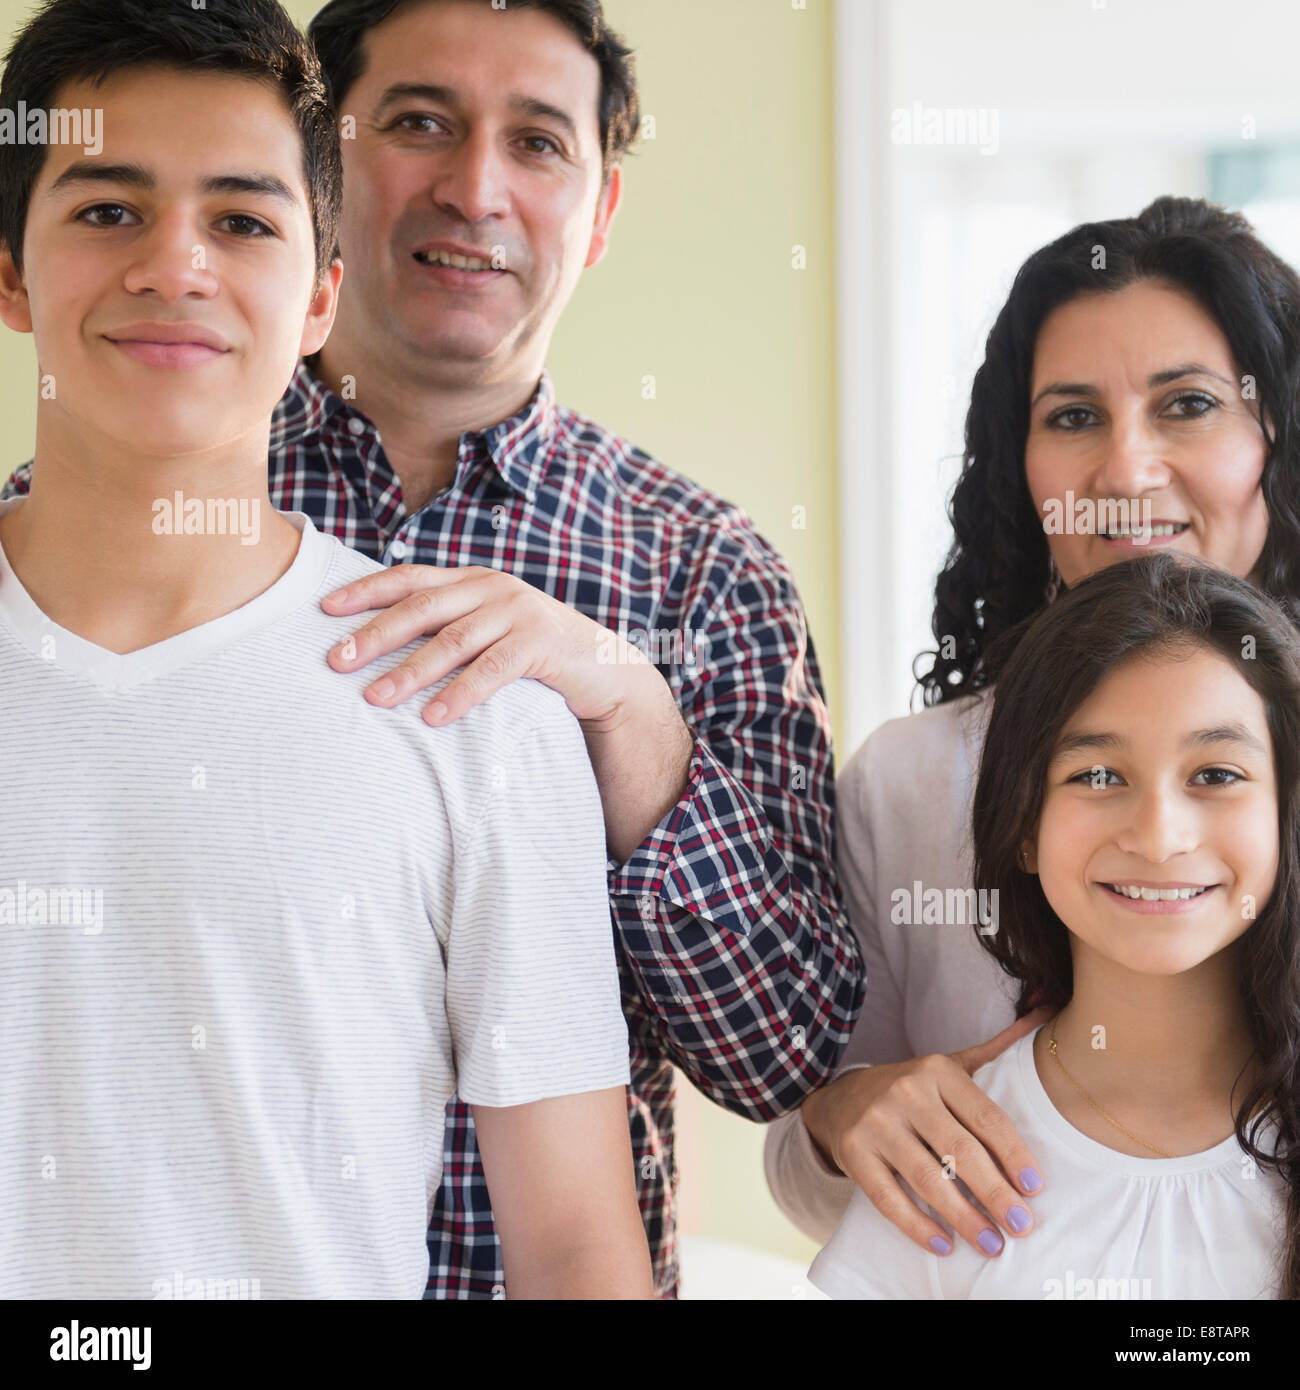 Hispanic family smiling Stock Photo